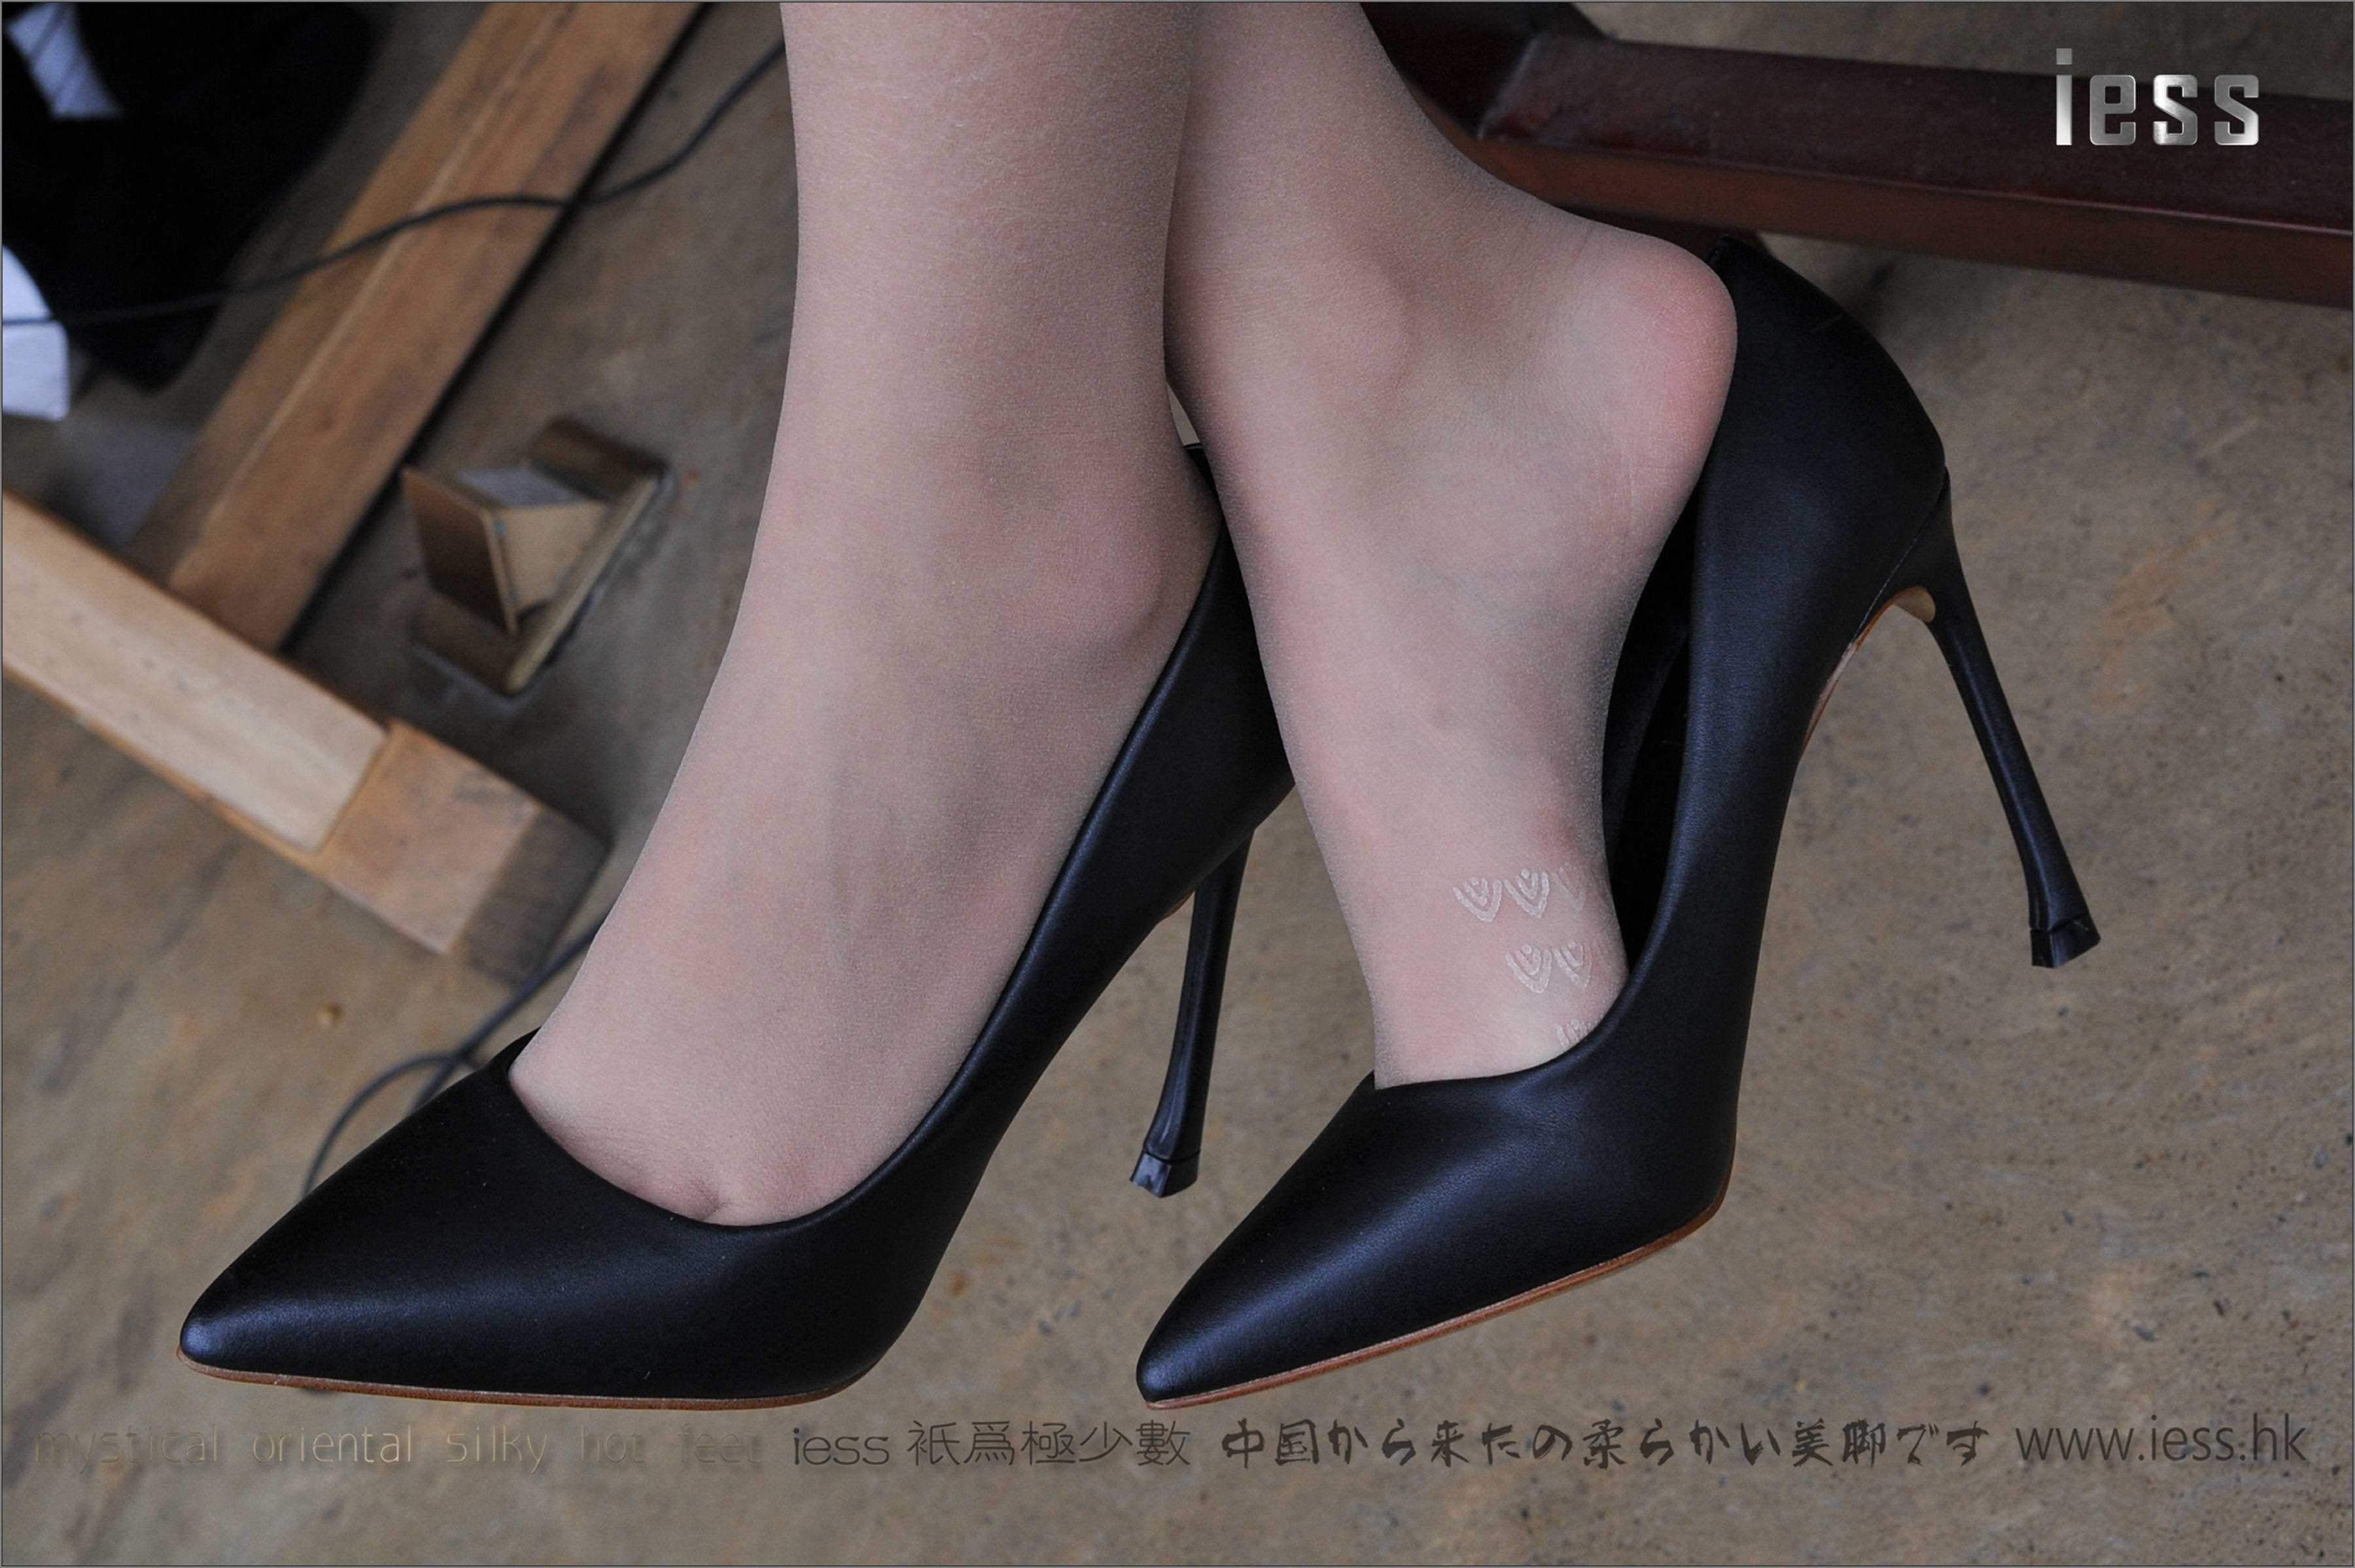 China Beauty Legs and feet 160